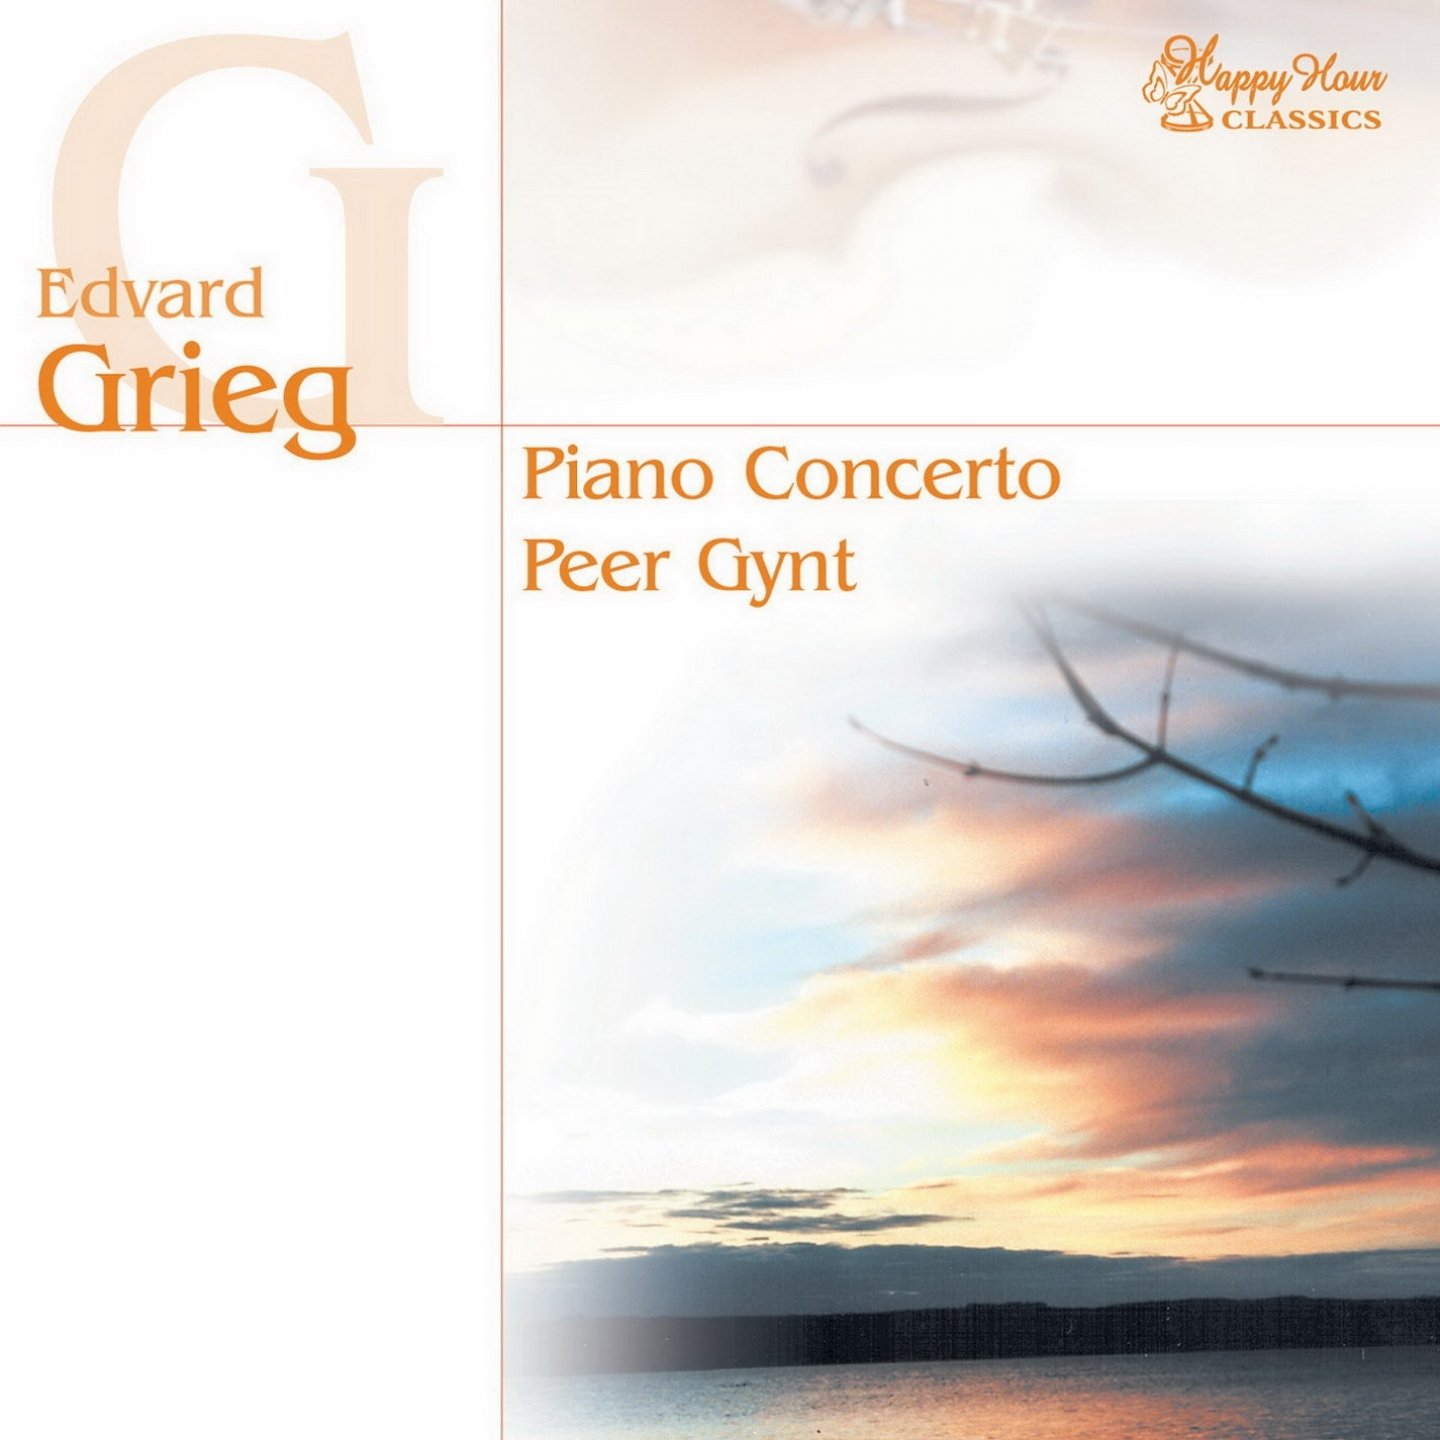 Peer gynt op 46. Edvard Grieg: "peer Gynt - morning mood". Edvard Grieg — peer Gynt Suite no. 1, op. 46 - I. morning mood. Peer Gynt Suite no. 1, op. 46. Peer Gynt Suite no. 1, op. 46: Morning mood Либор Песек.